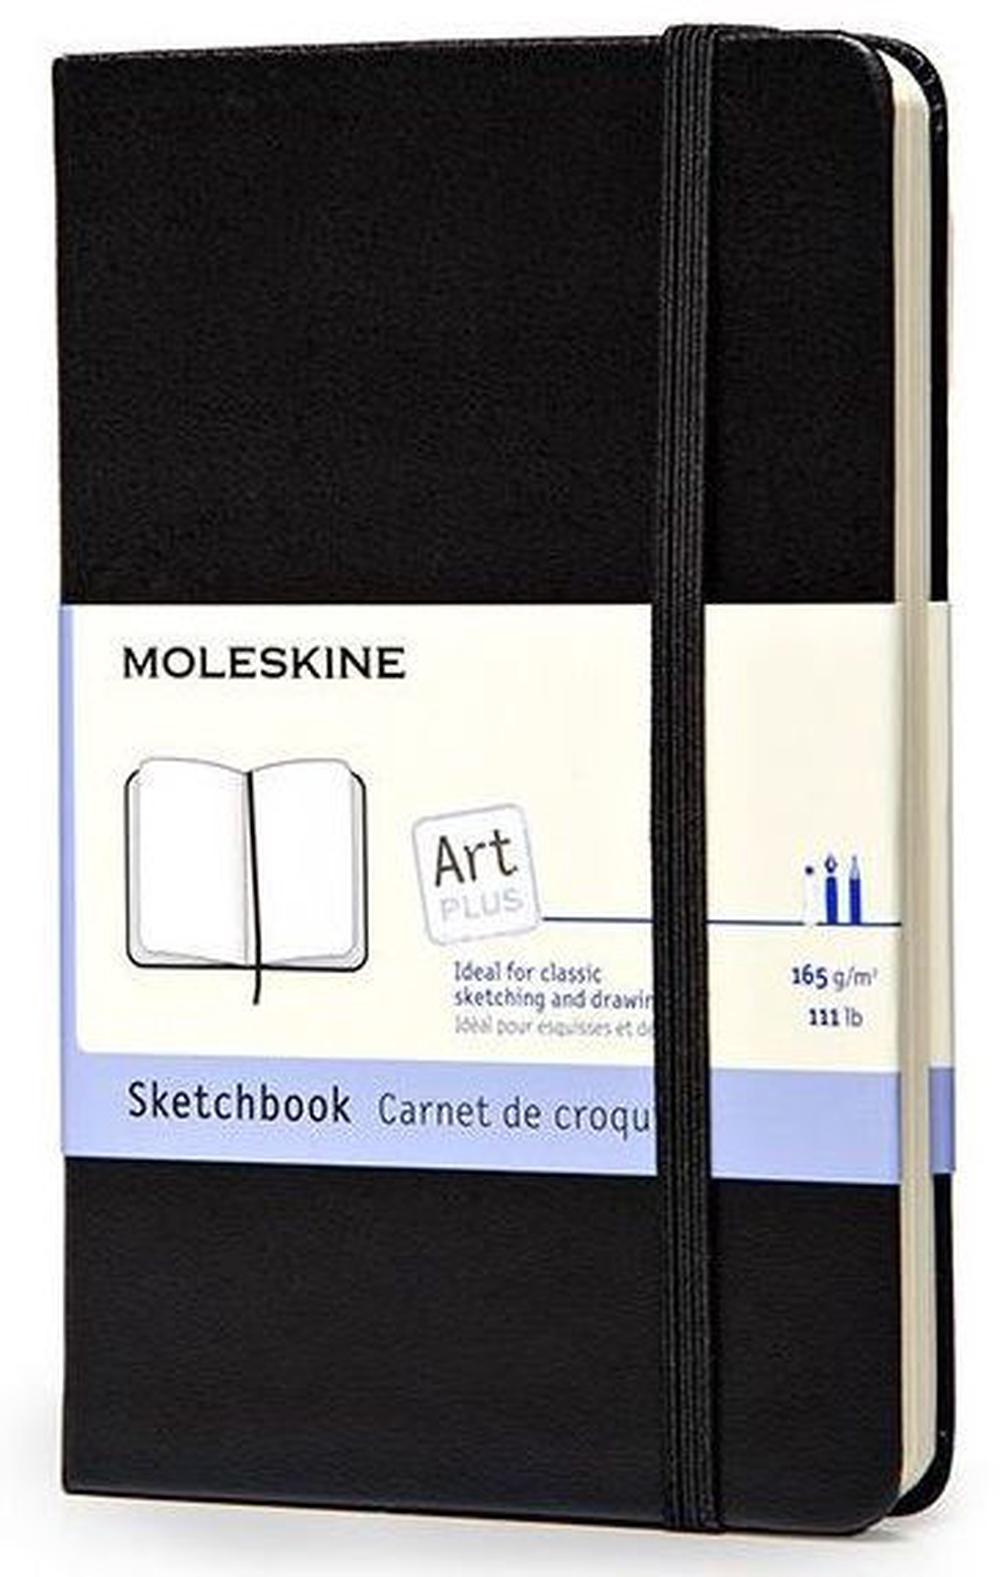 Moleskine Sketchbook by Moleskine, Imitation Leather, 9788883701054